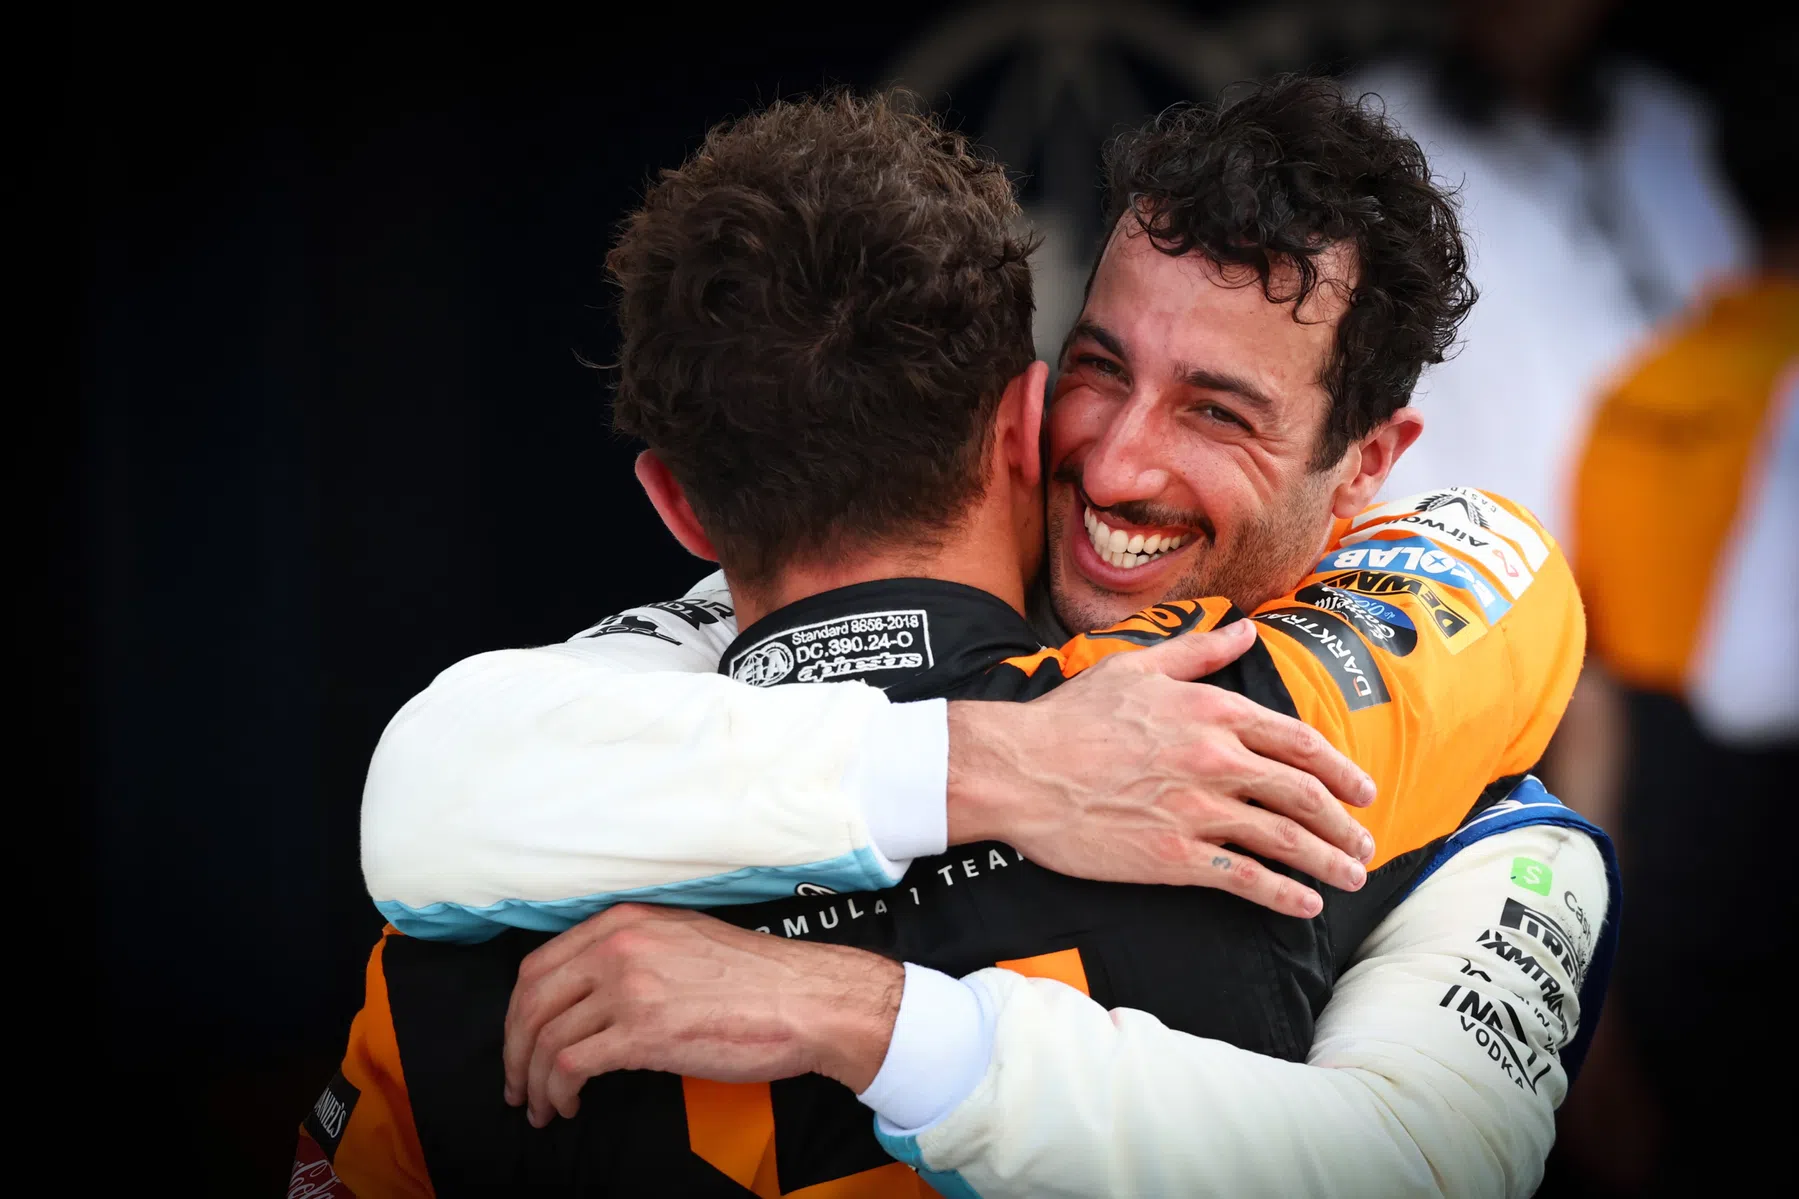 Ricciardo tells who his best friend on the grid is